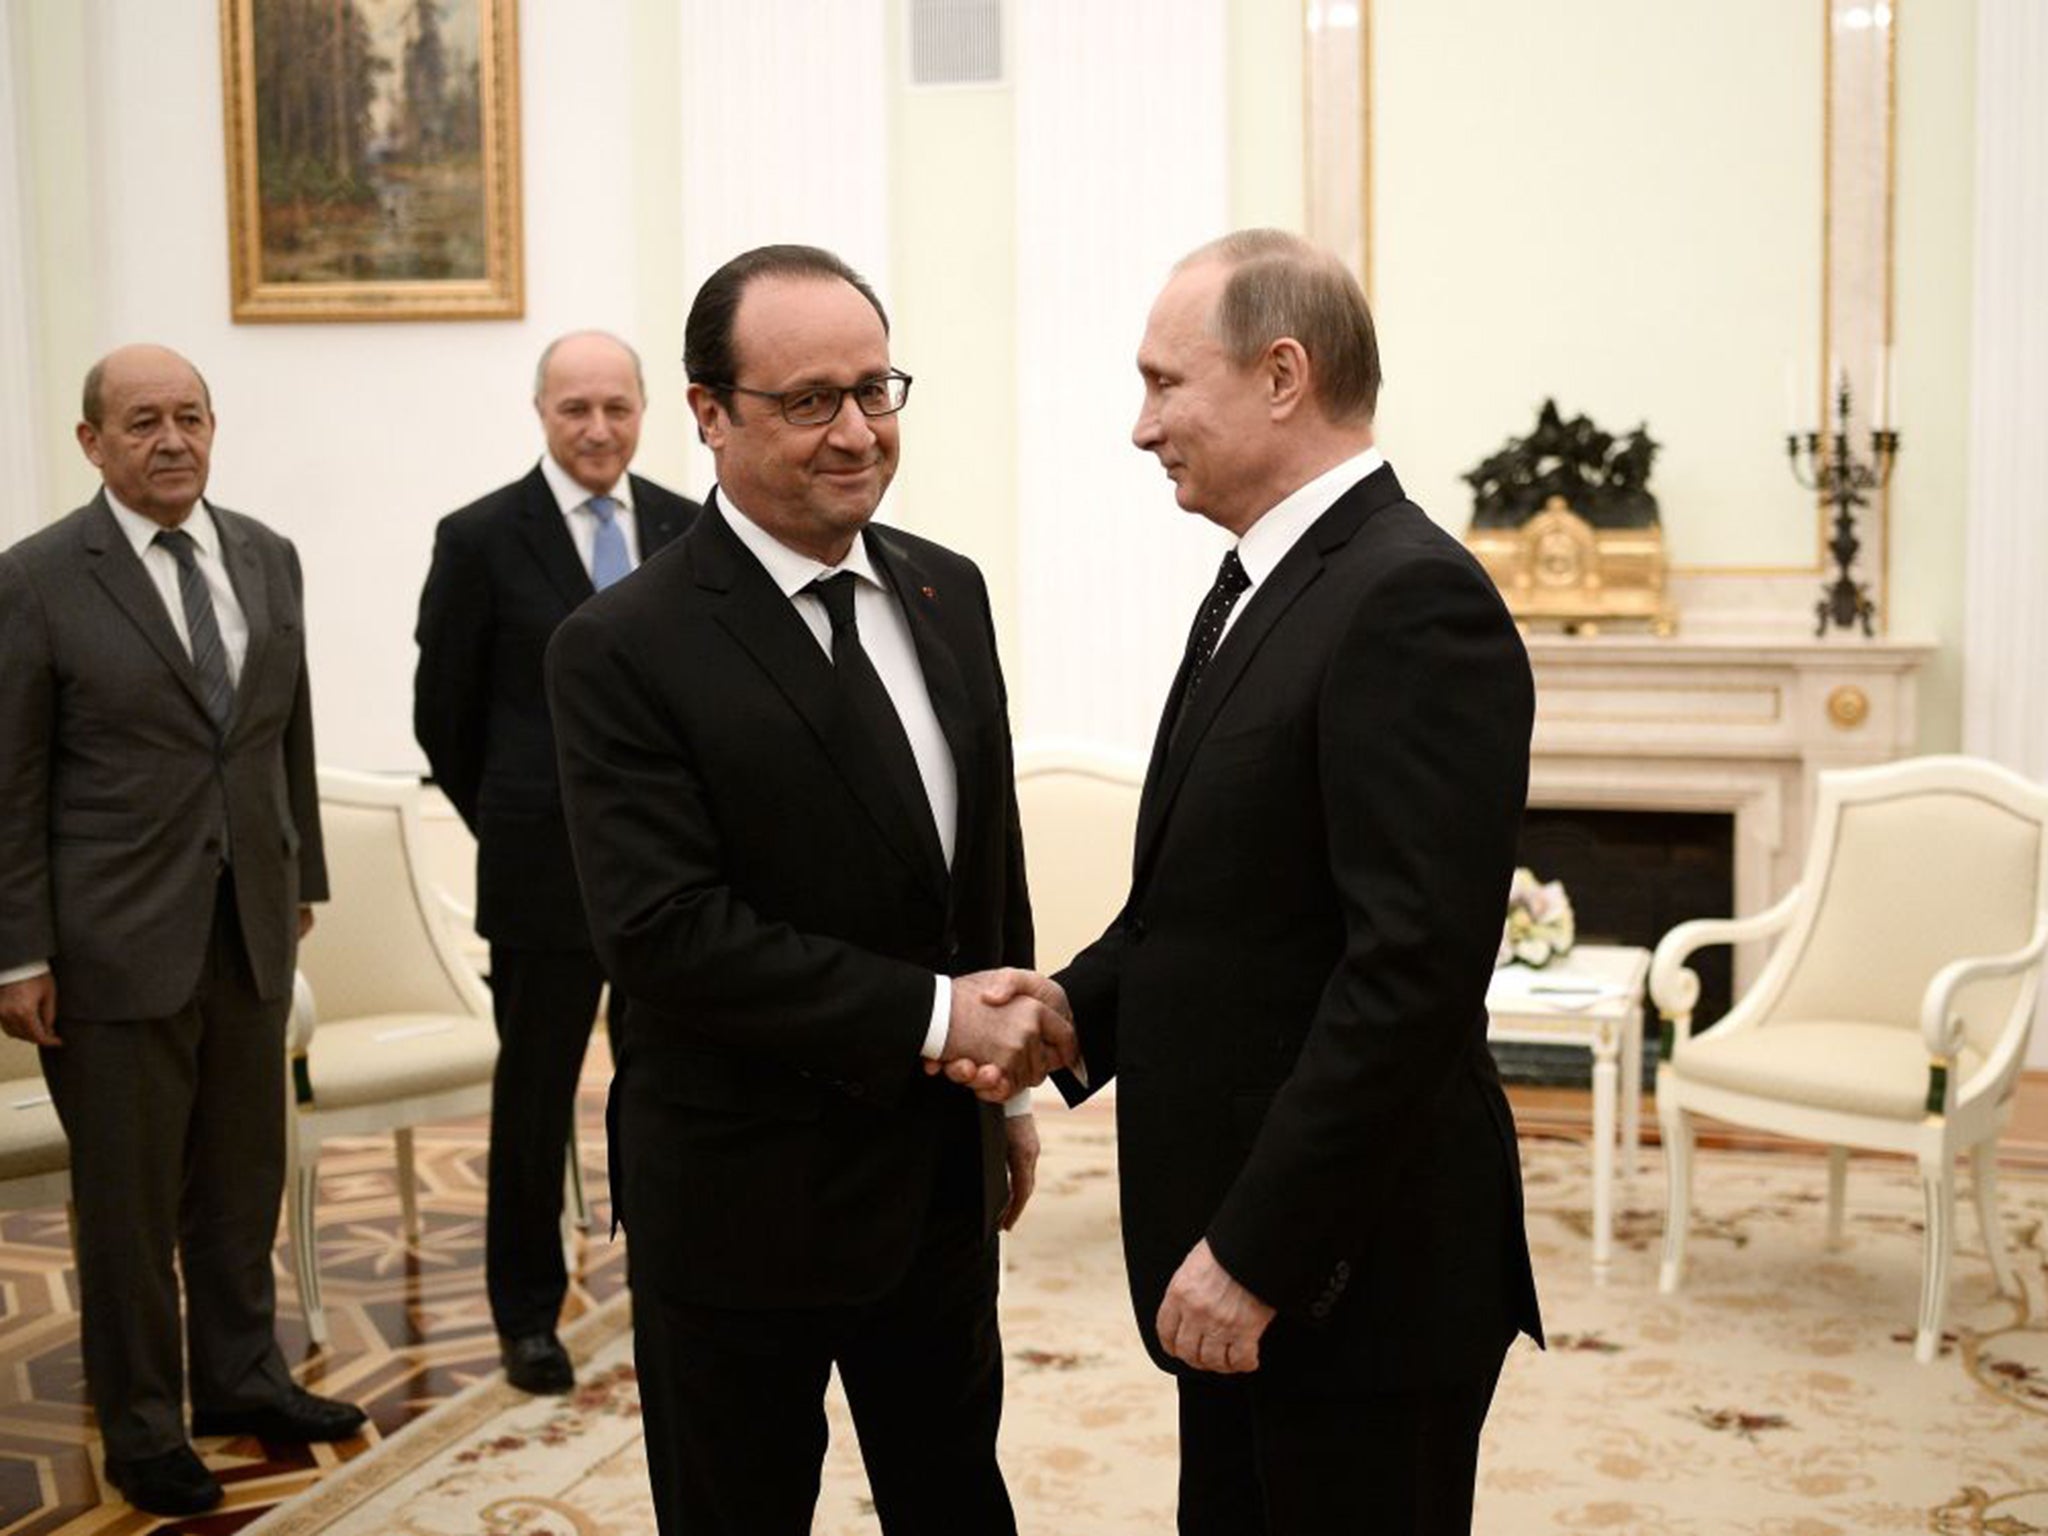 Vladimir Putin welcomes François Hollande to the Kremlin on Thursday